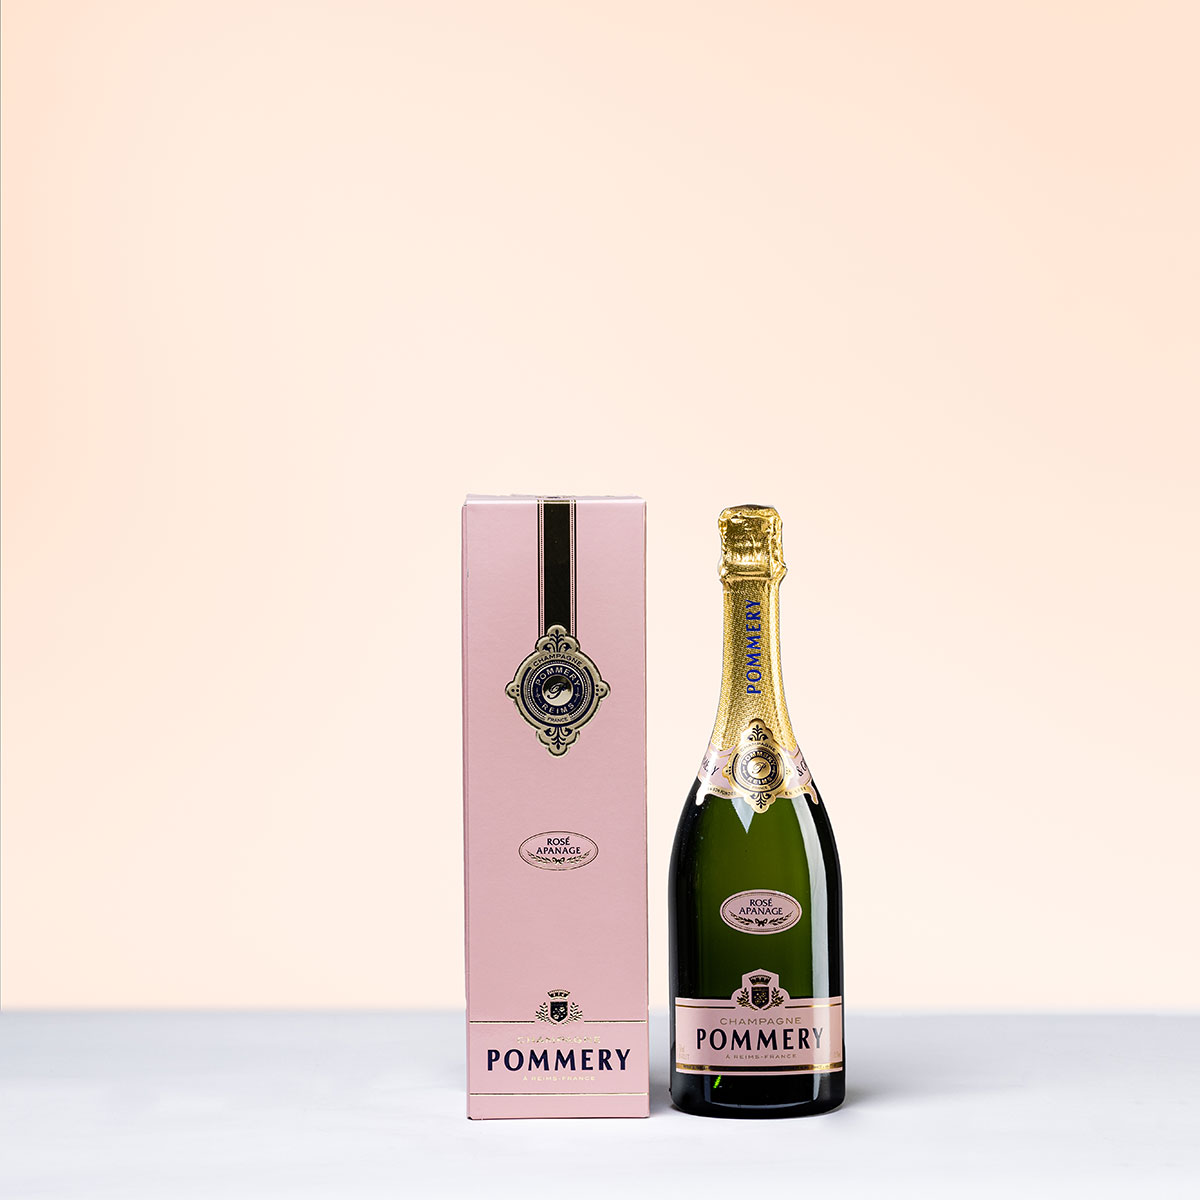 Zoom Finesse Worm | Pink Champagne | FishUSA